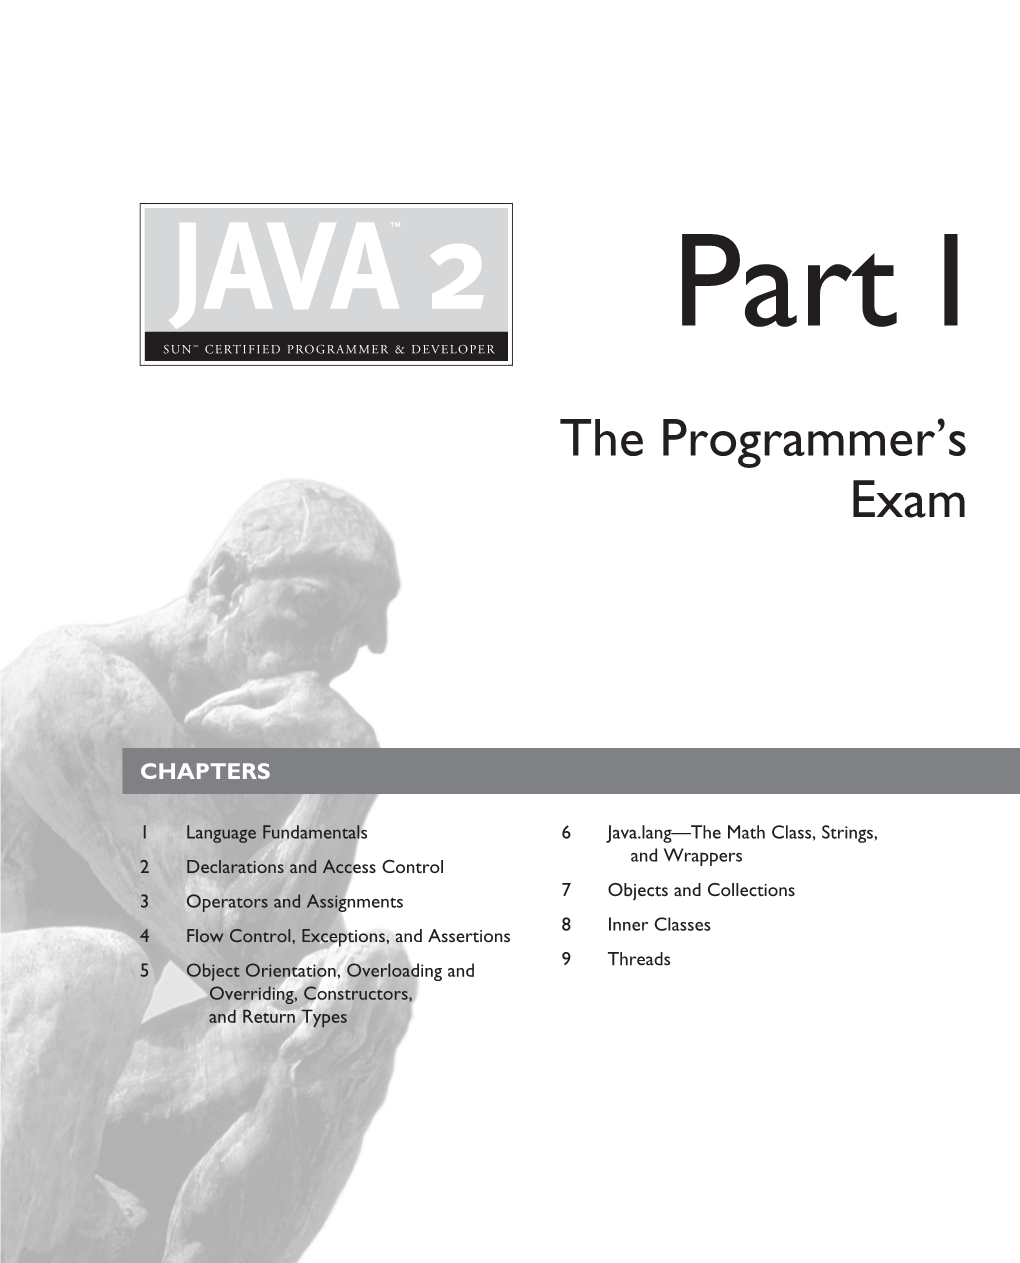 Java Programming Language Keywords